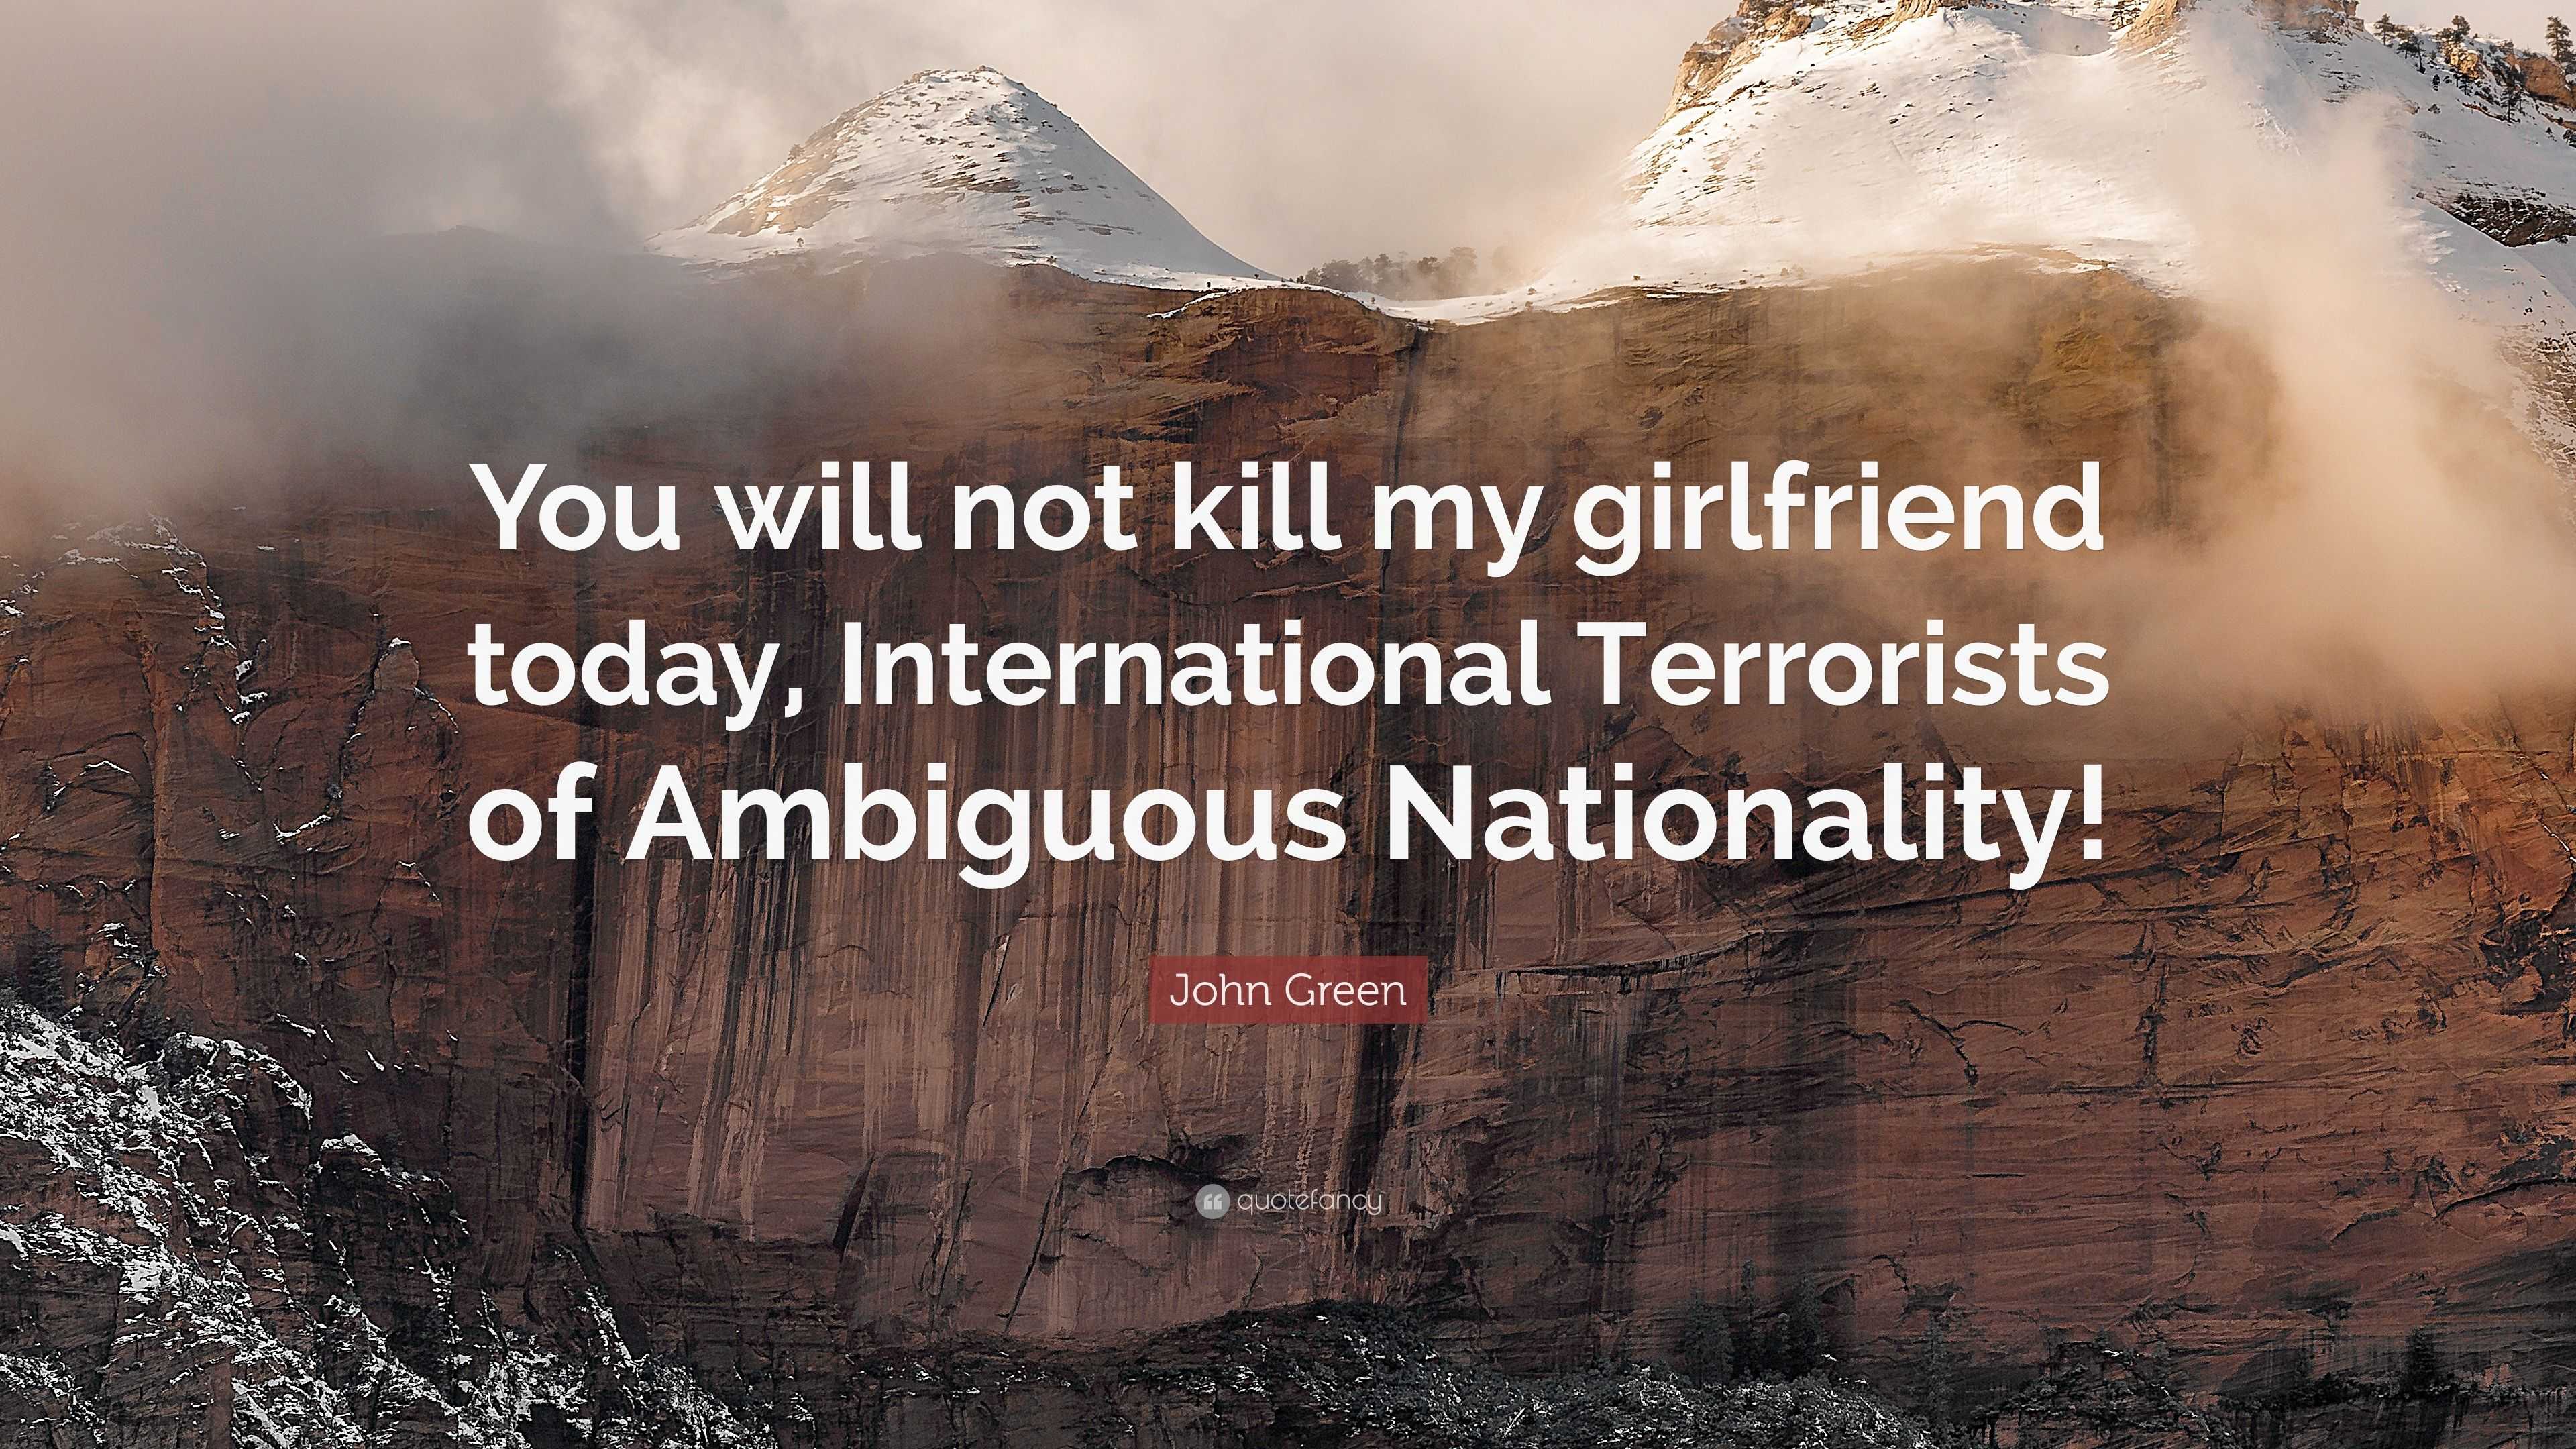 John Green Quote: “You will not kill my girlfriend today, International ...